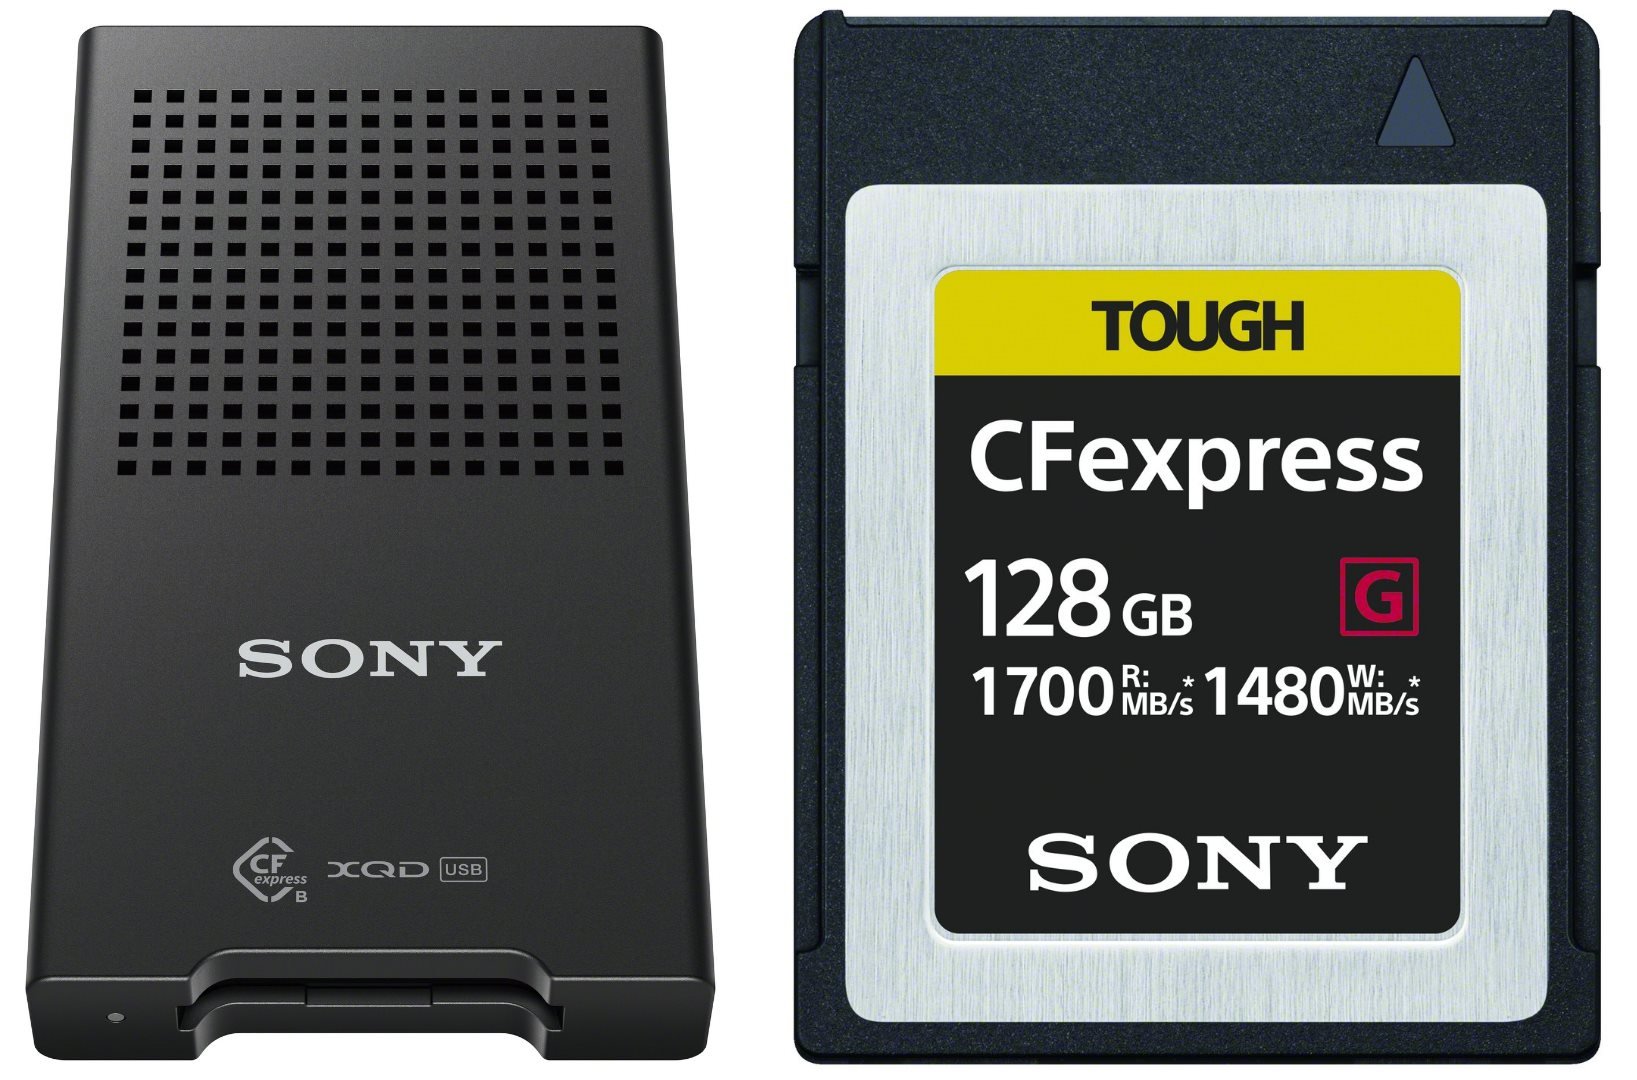 Silicon Power Carte mémoire Cinema EX CFexpress Type B jusqu'à 1700 Mo/s en lecture 512 Go 